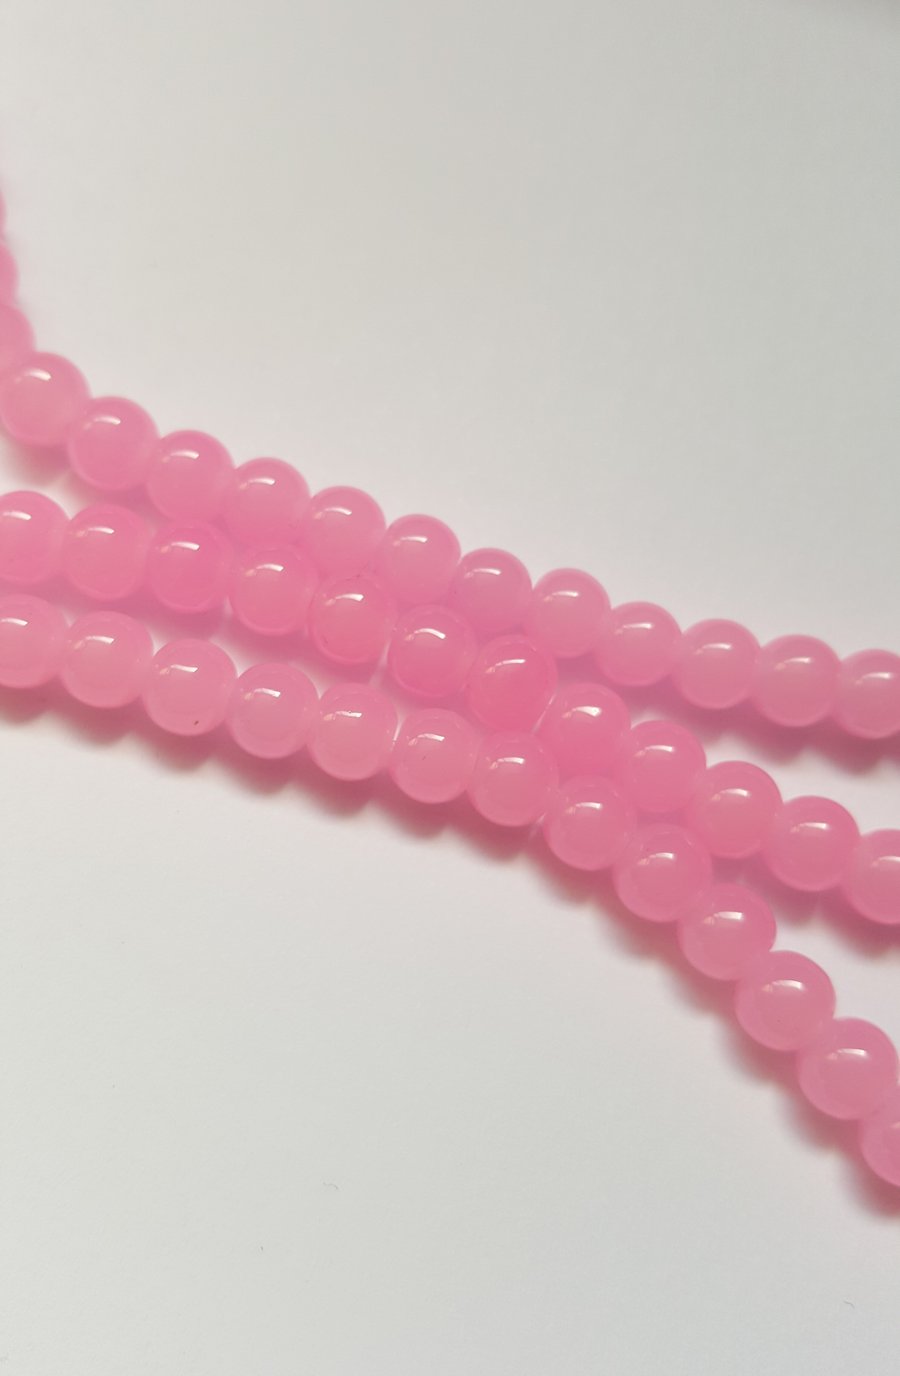 50 x Imitation Jade Glass Beads - Round - 6mm - Pale Pink 